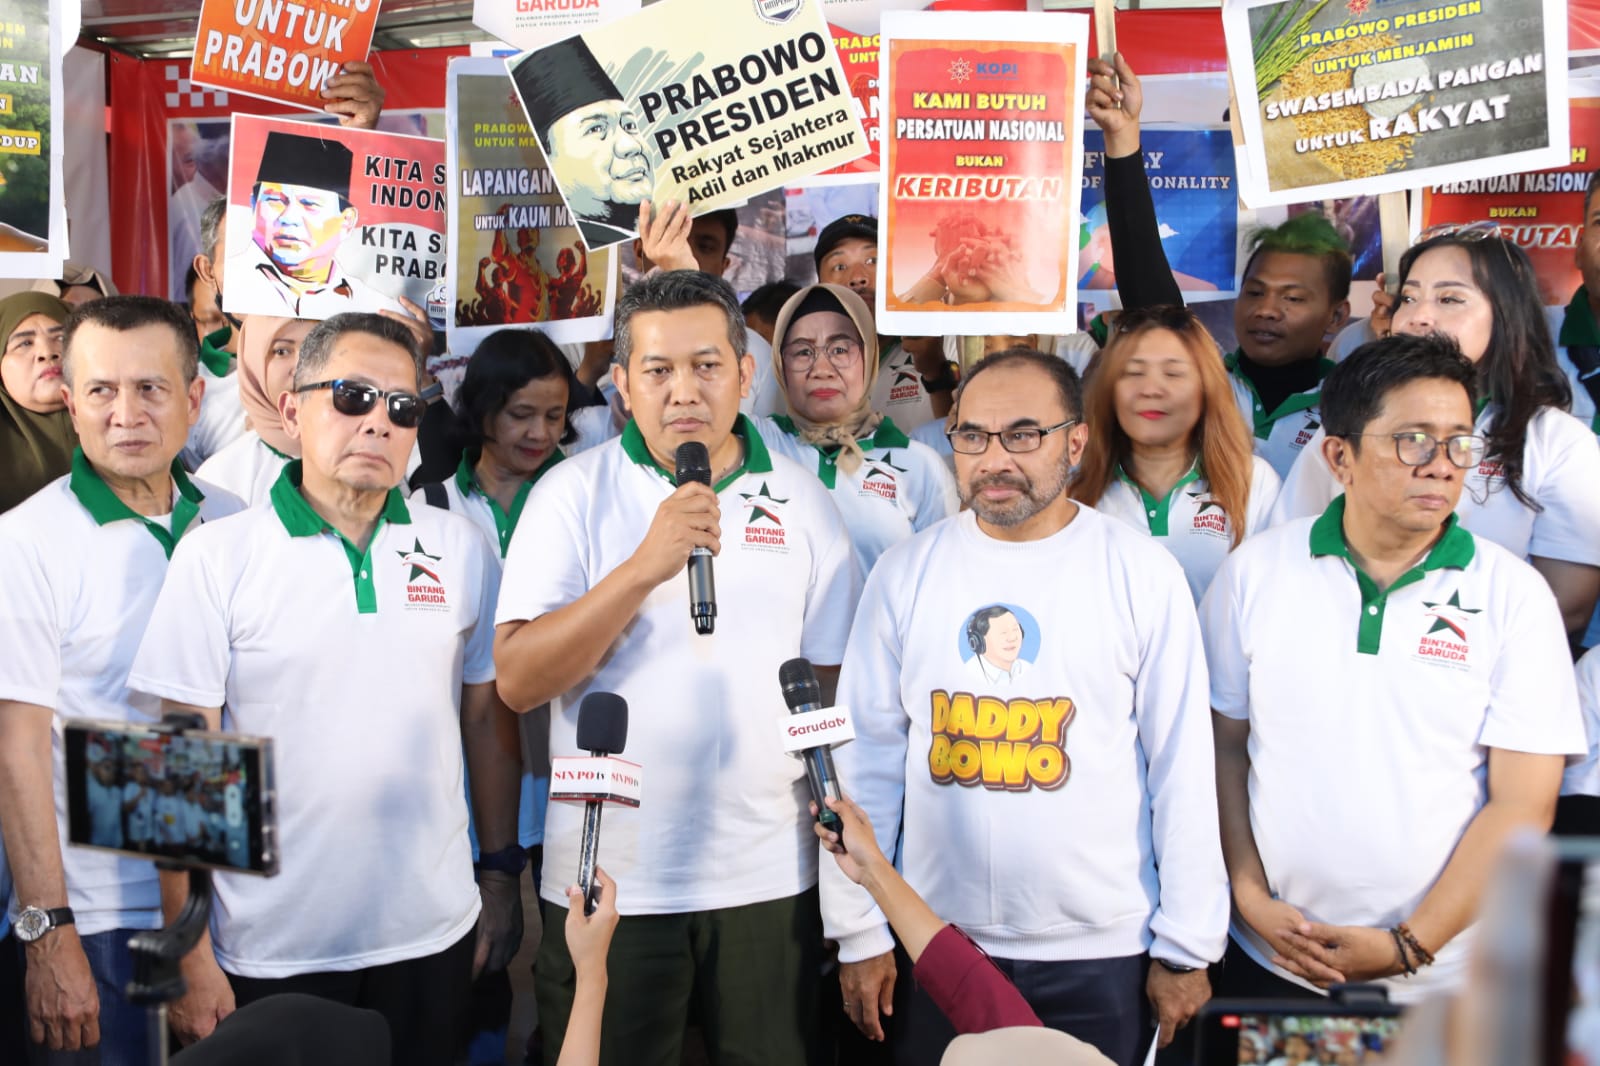 Deklarasi Bintang Garuda, Haris Rusly Moti: Kita Menangkan Pak Prabowo dengan Kampanye Sejuk dan Damai